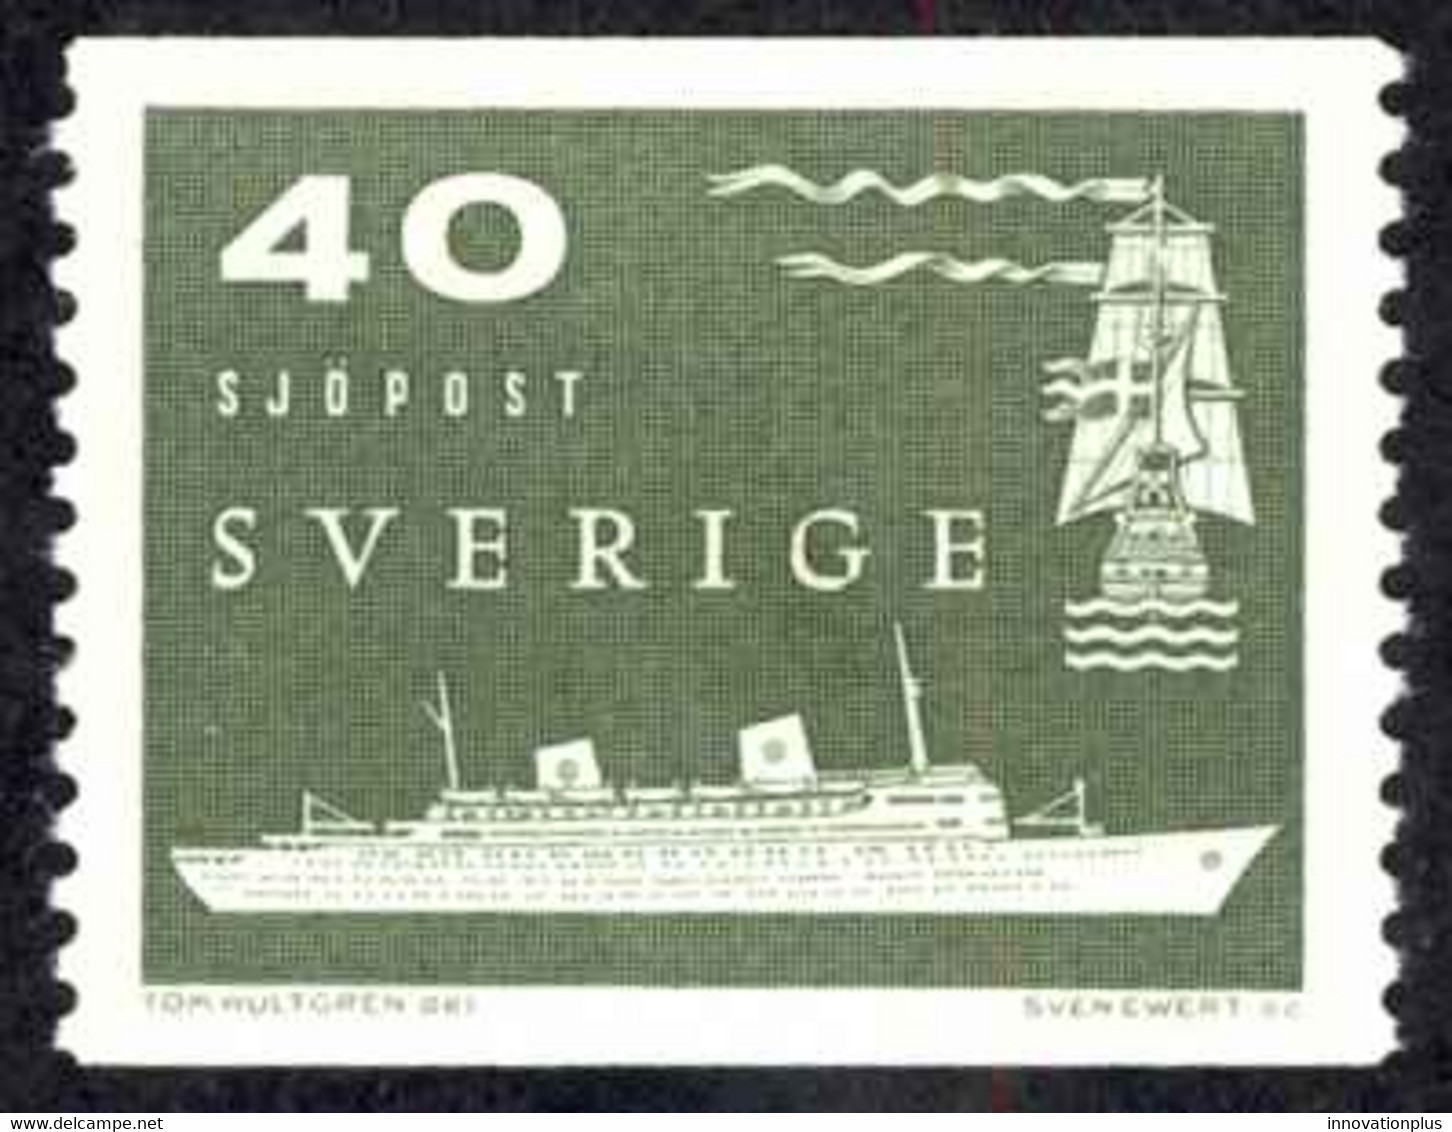 Sweden Sc# 522 MNH Coil 1958 40o Gray Olive Sea Vessels - Unused Stamps